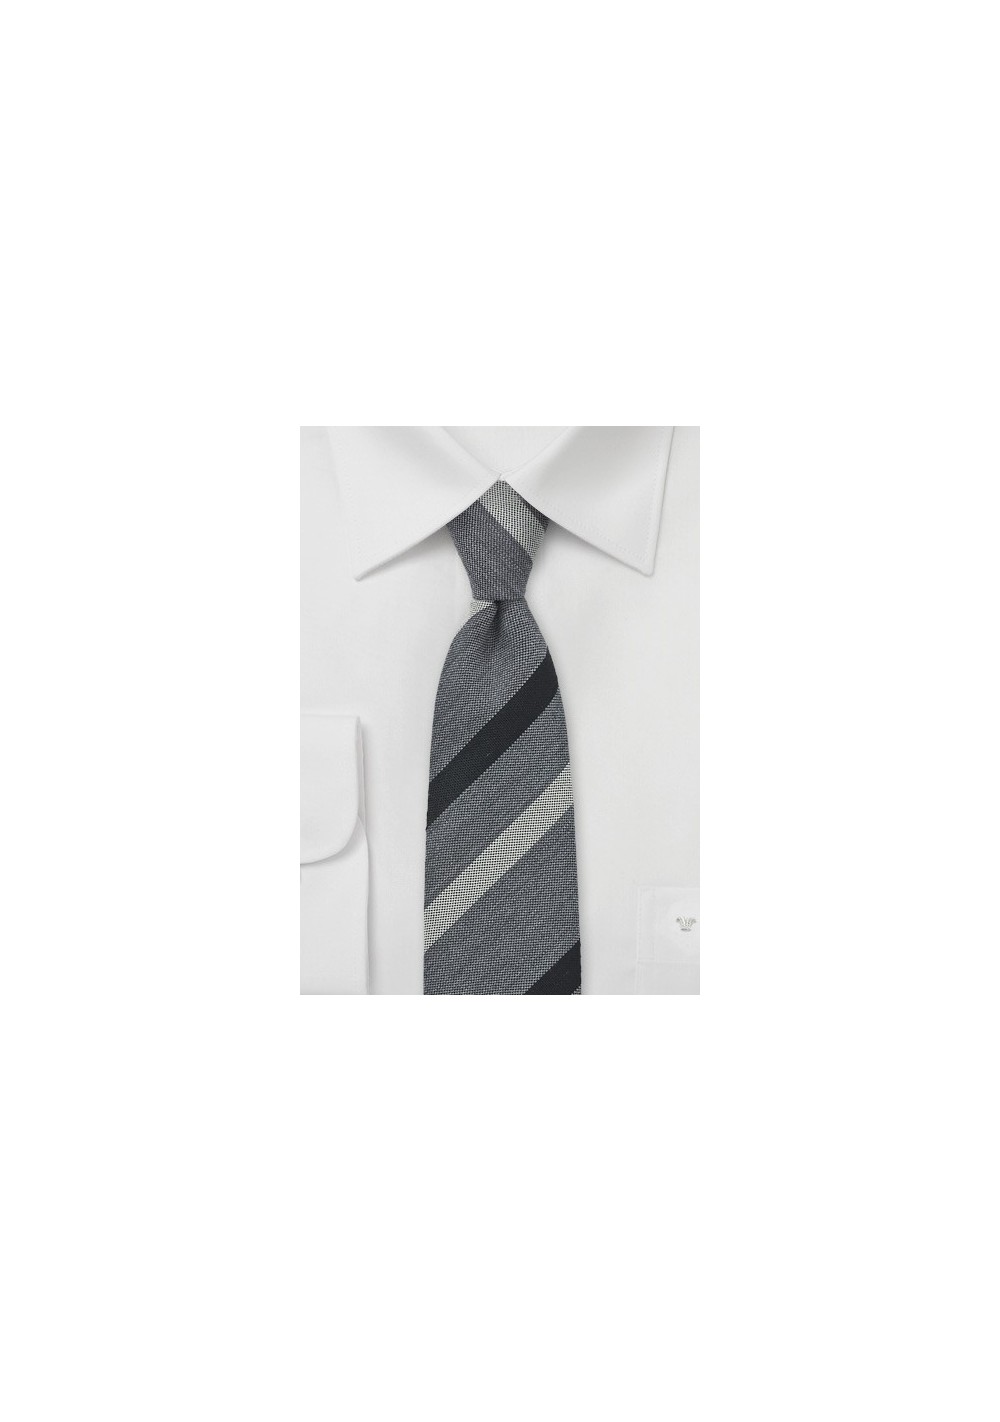 BlackBird Designer Tie in Gray and Black